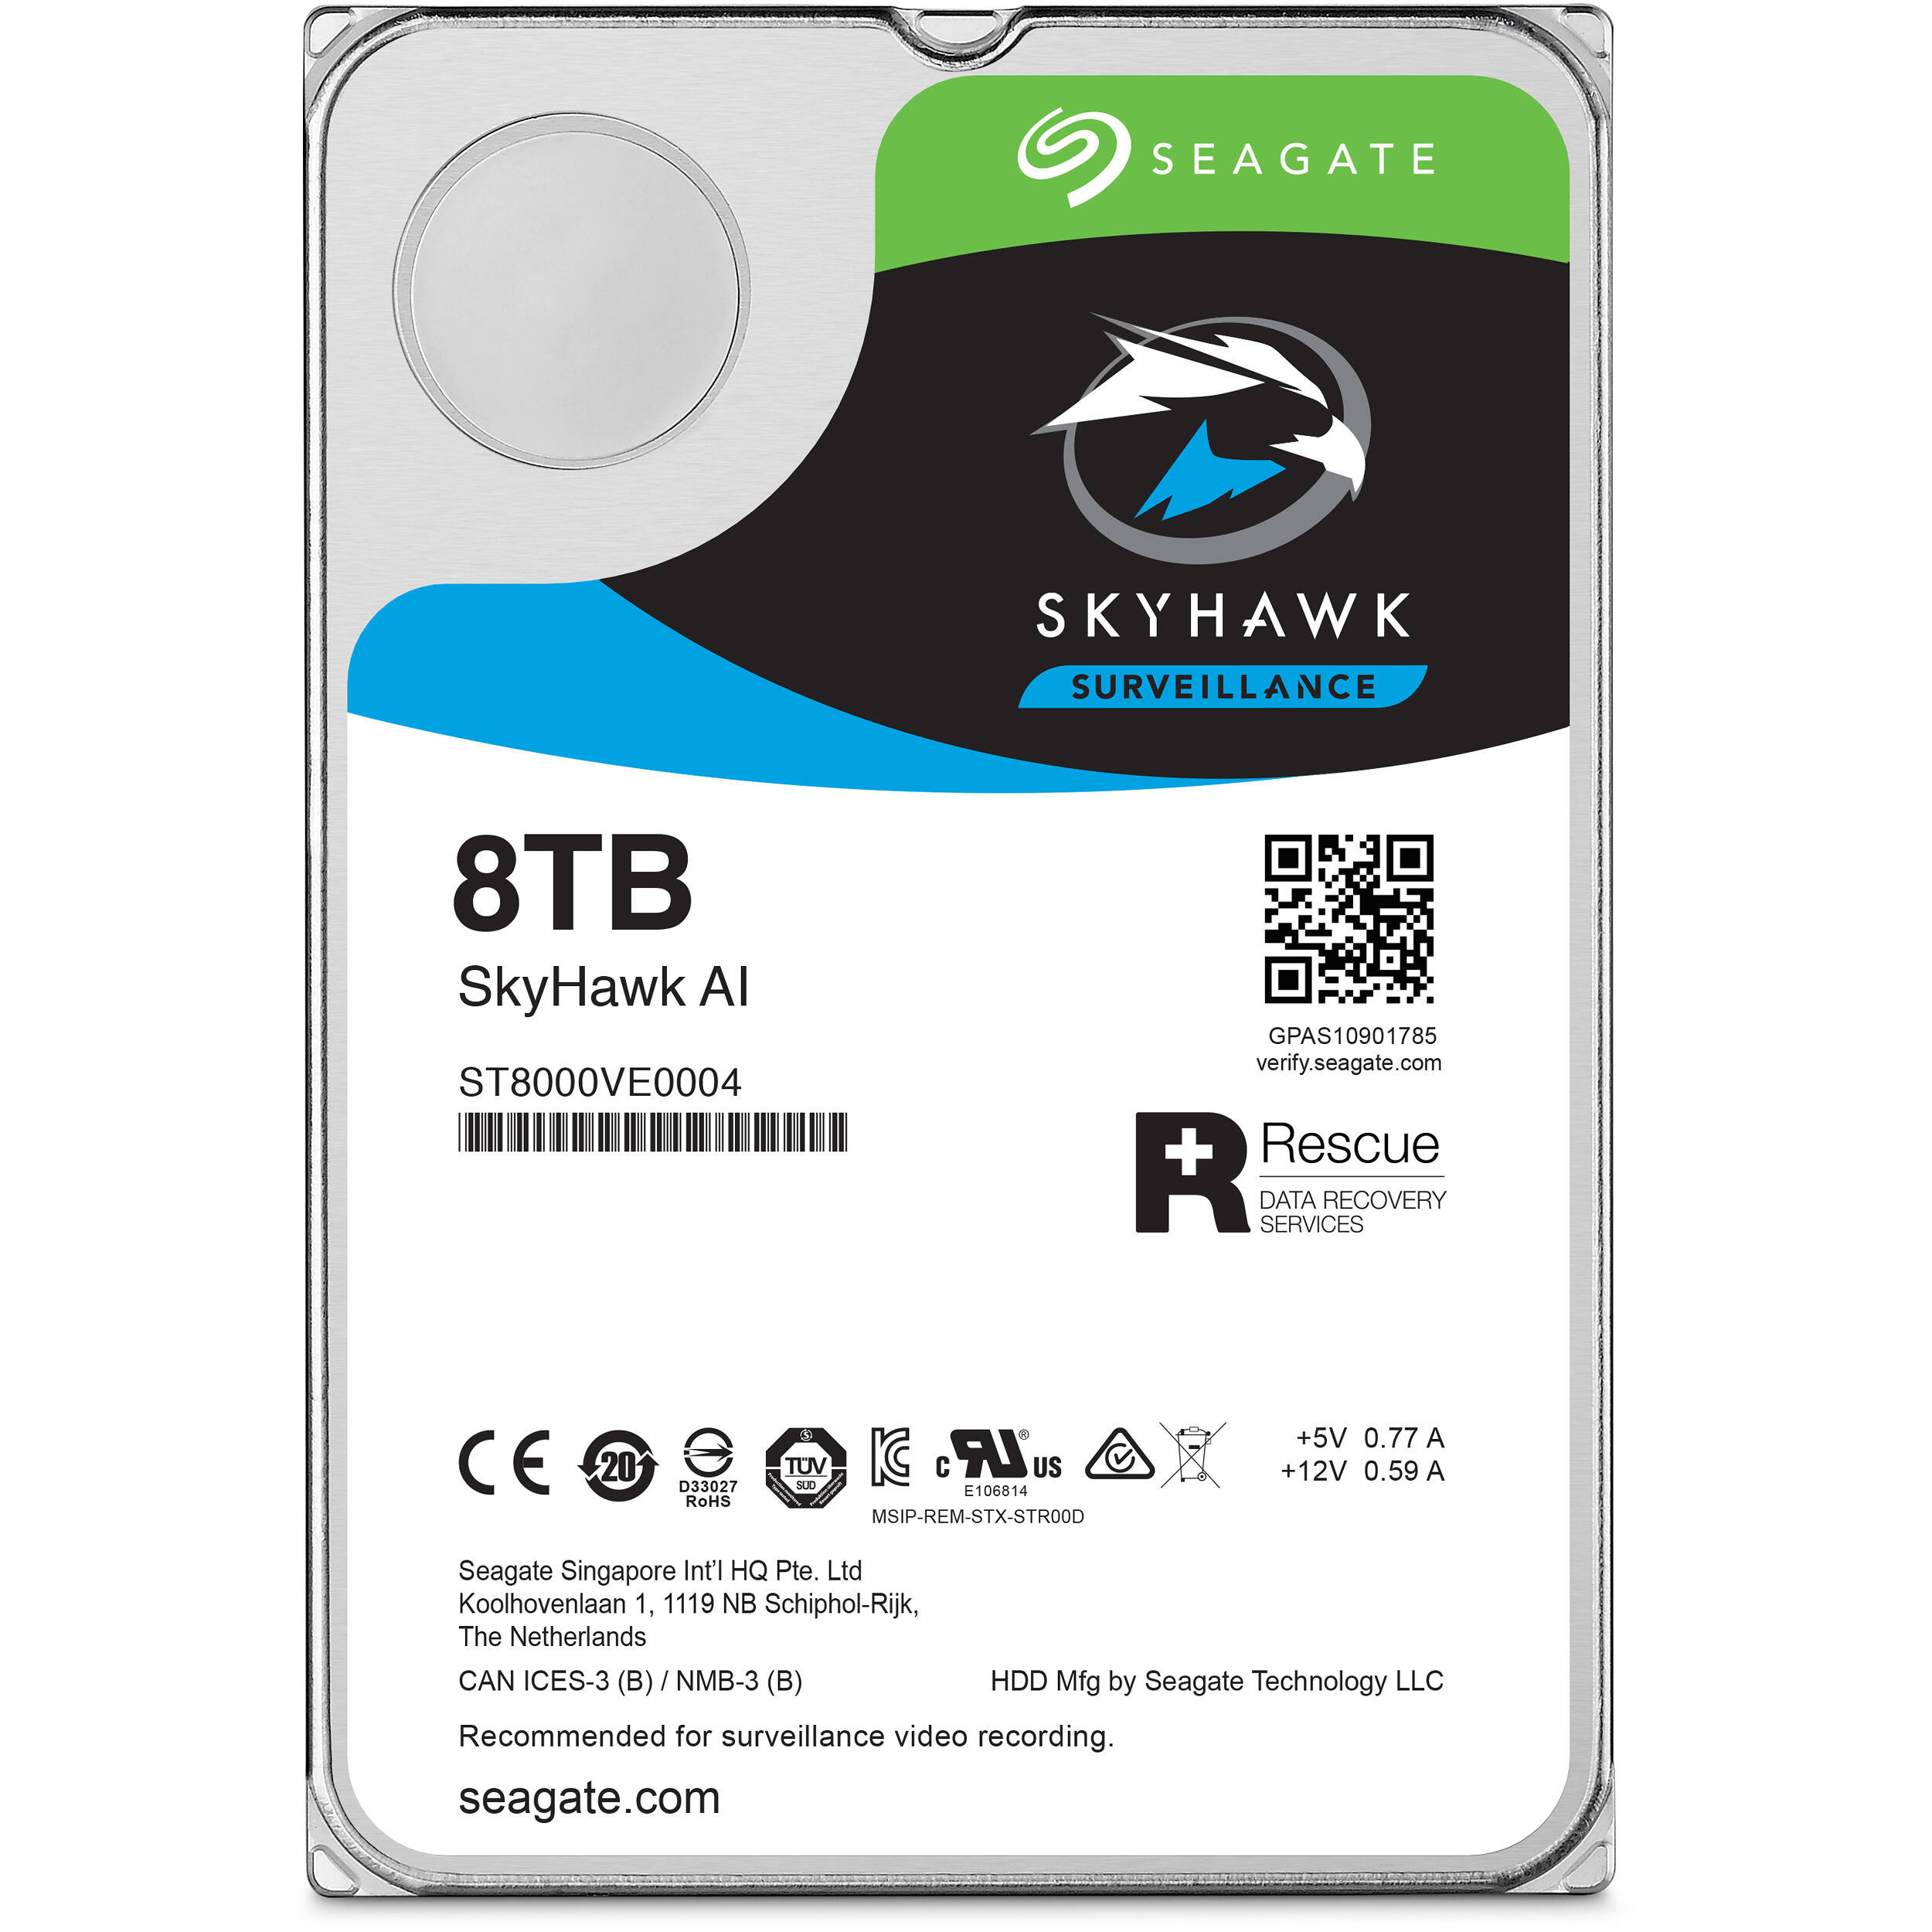 Seagate 8TB SkyHawk AI 7200 rpm SATA III 3.5" Internal Surveillance HDD